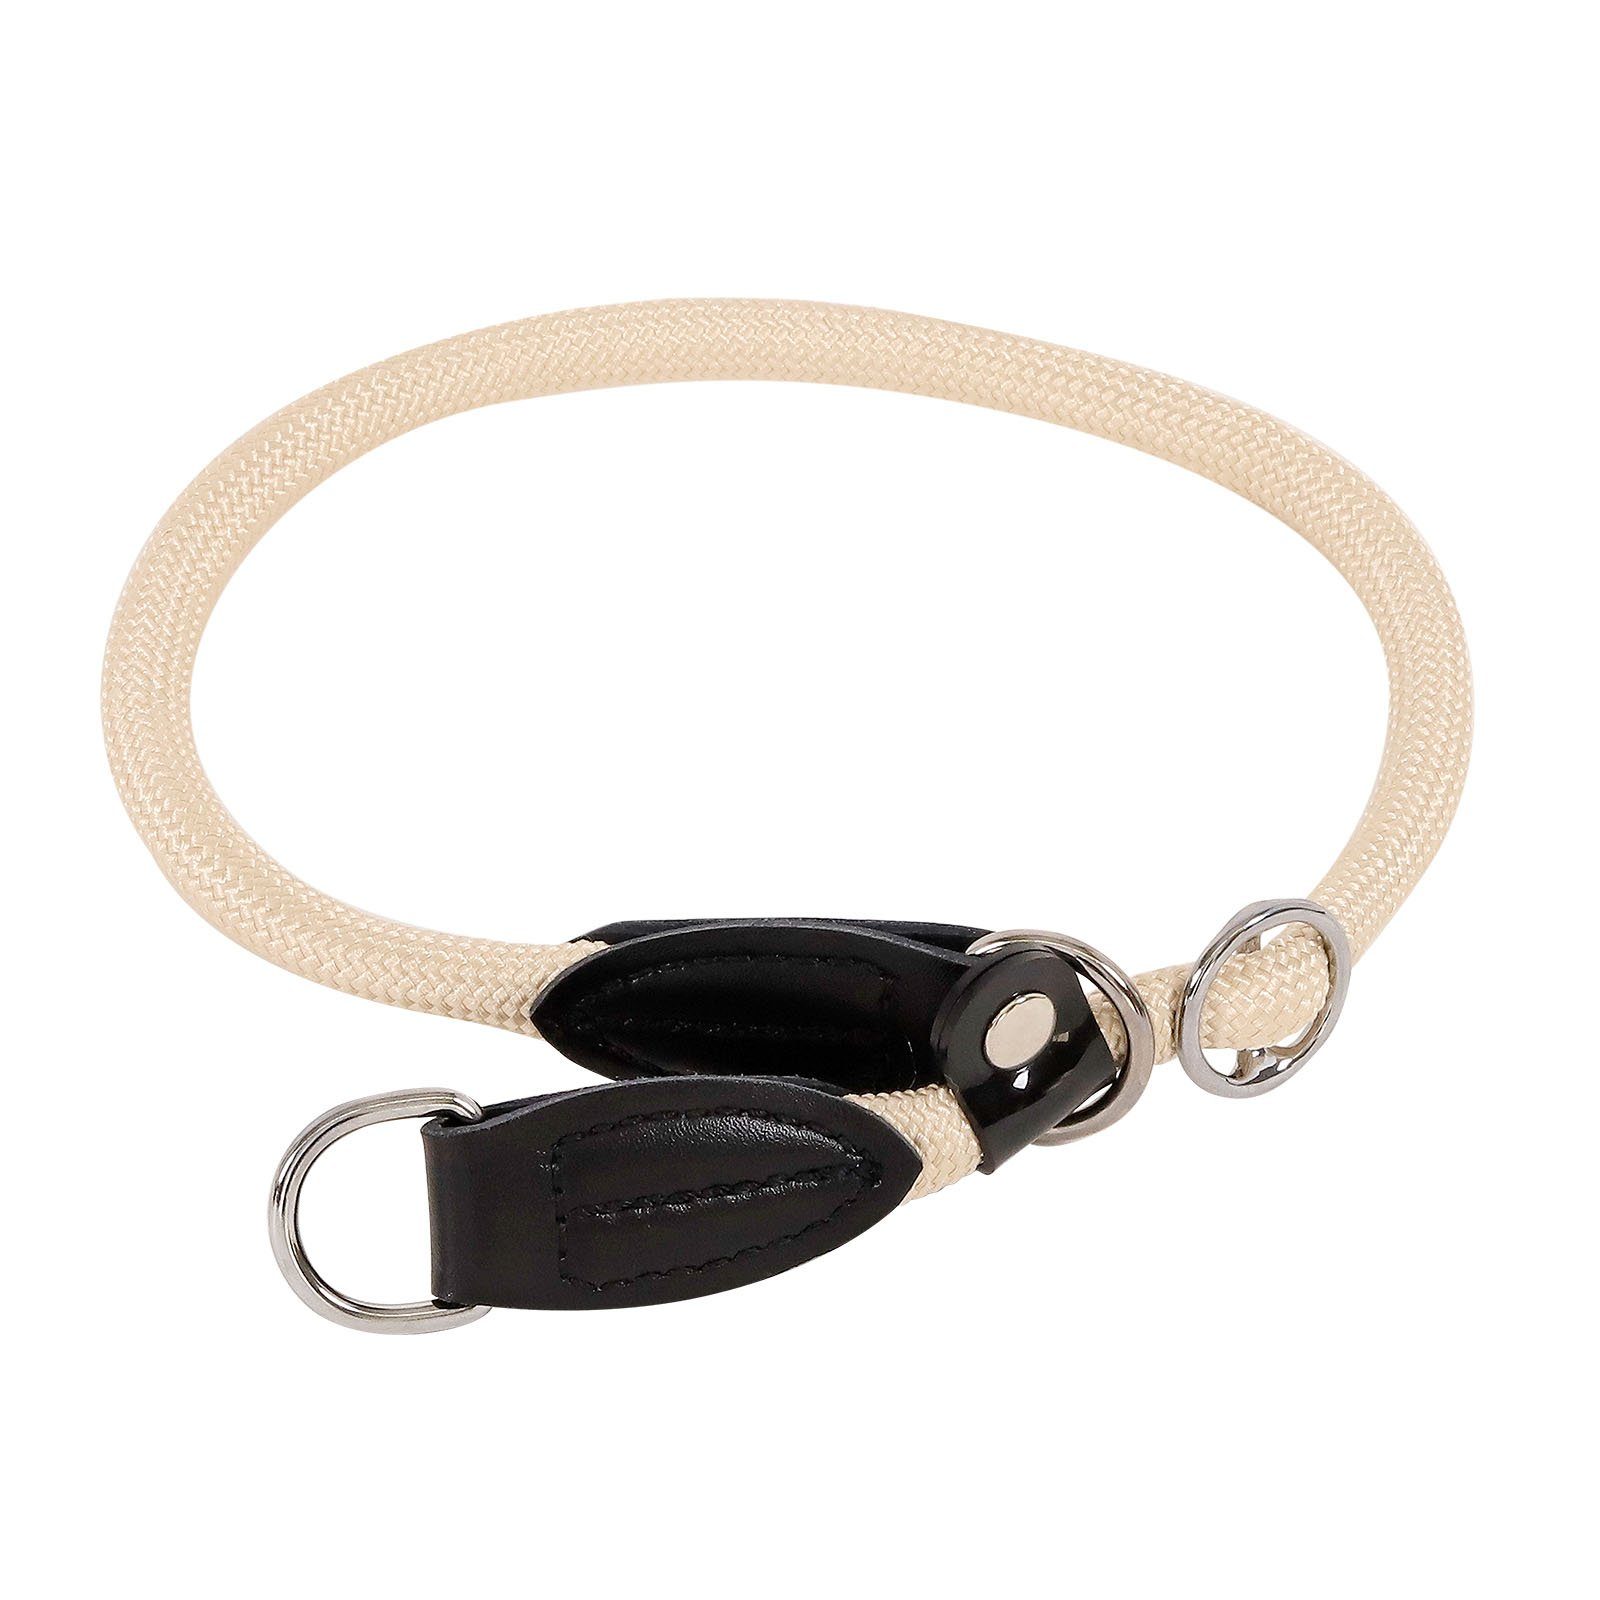 lionto Hunde-Halsband Hundehalsband mit Zugstopp, Retrieverhalsband, Nylon, 55 cm, beige